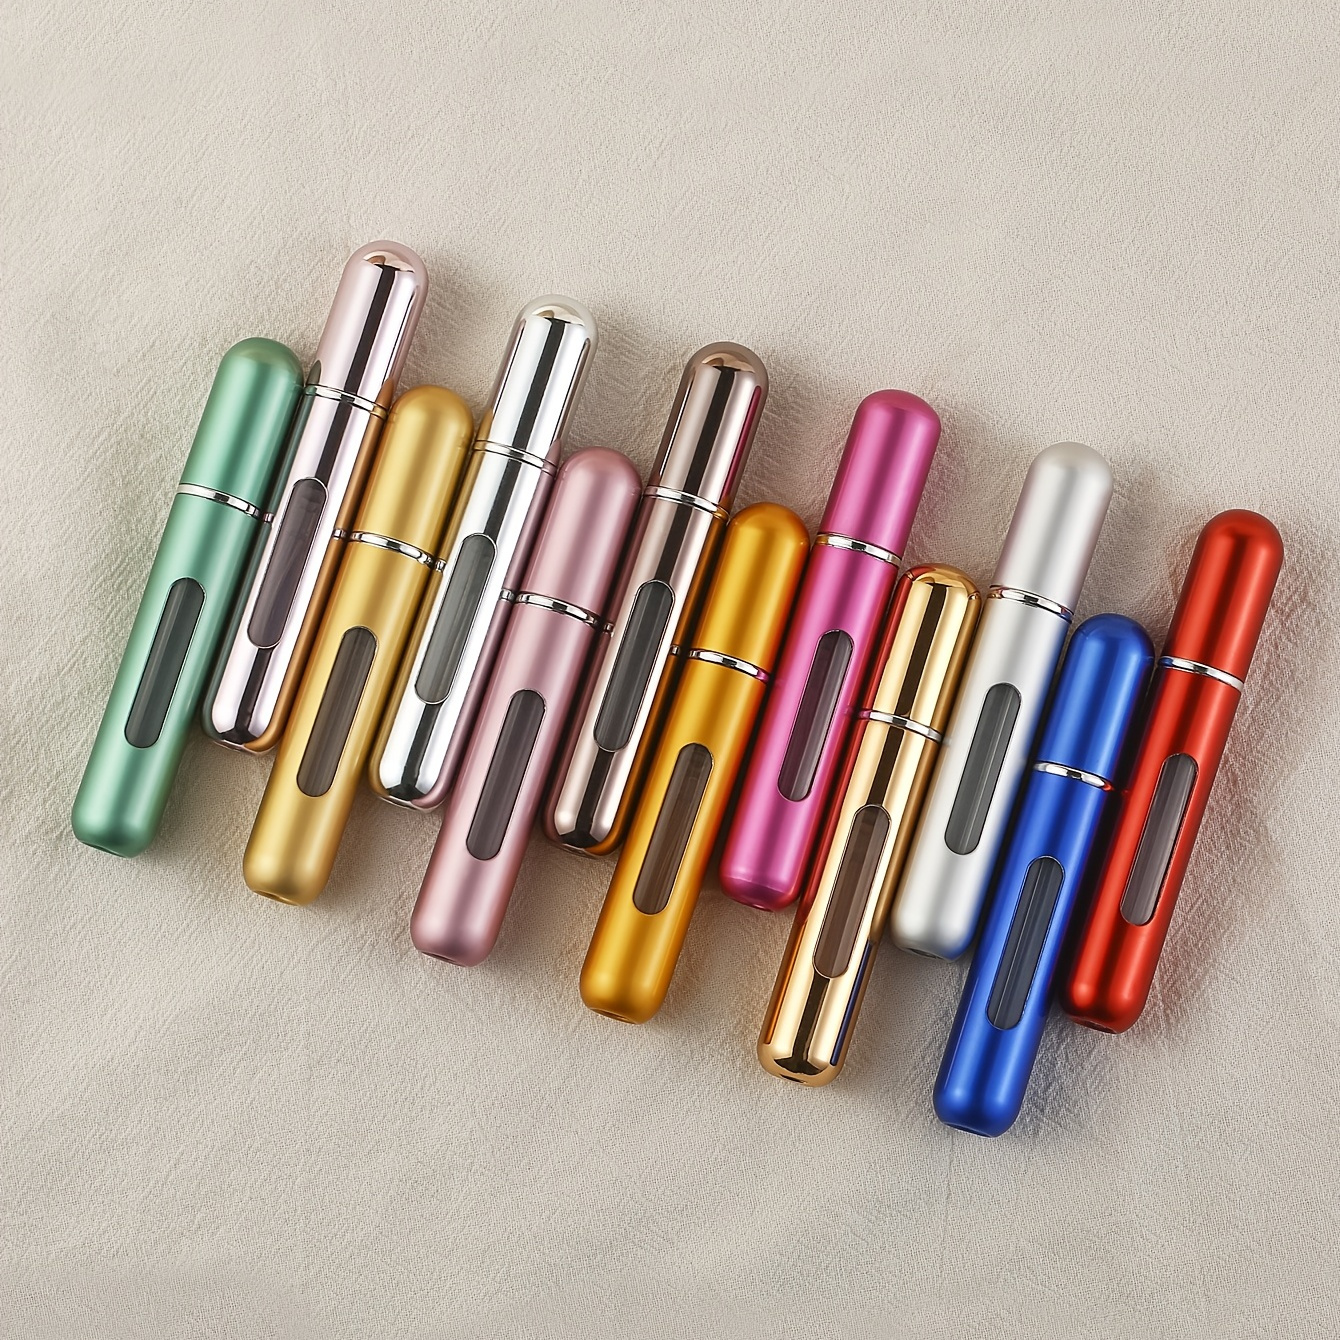 Topseller 5ml Portable Mini Refillable Perfume Atomizer Bottle for Travel  Spray Scent Pump Case Multicolor - 8 Pack